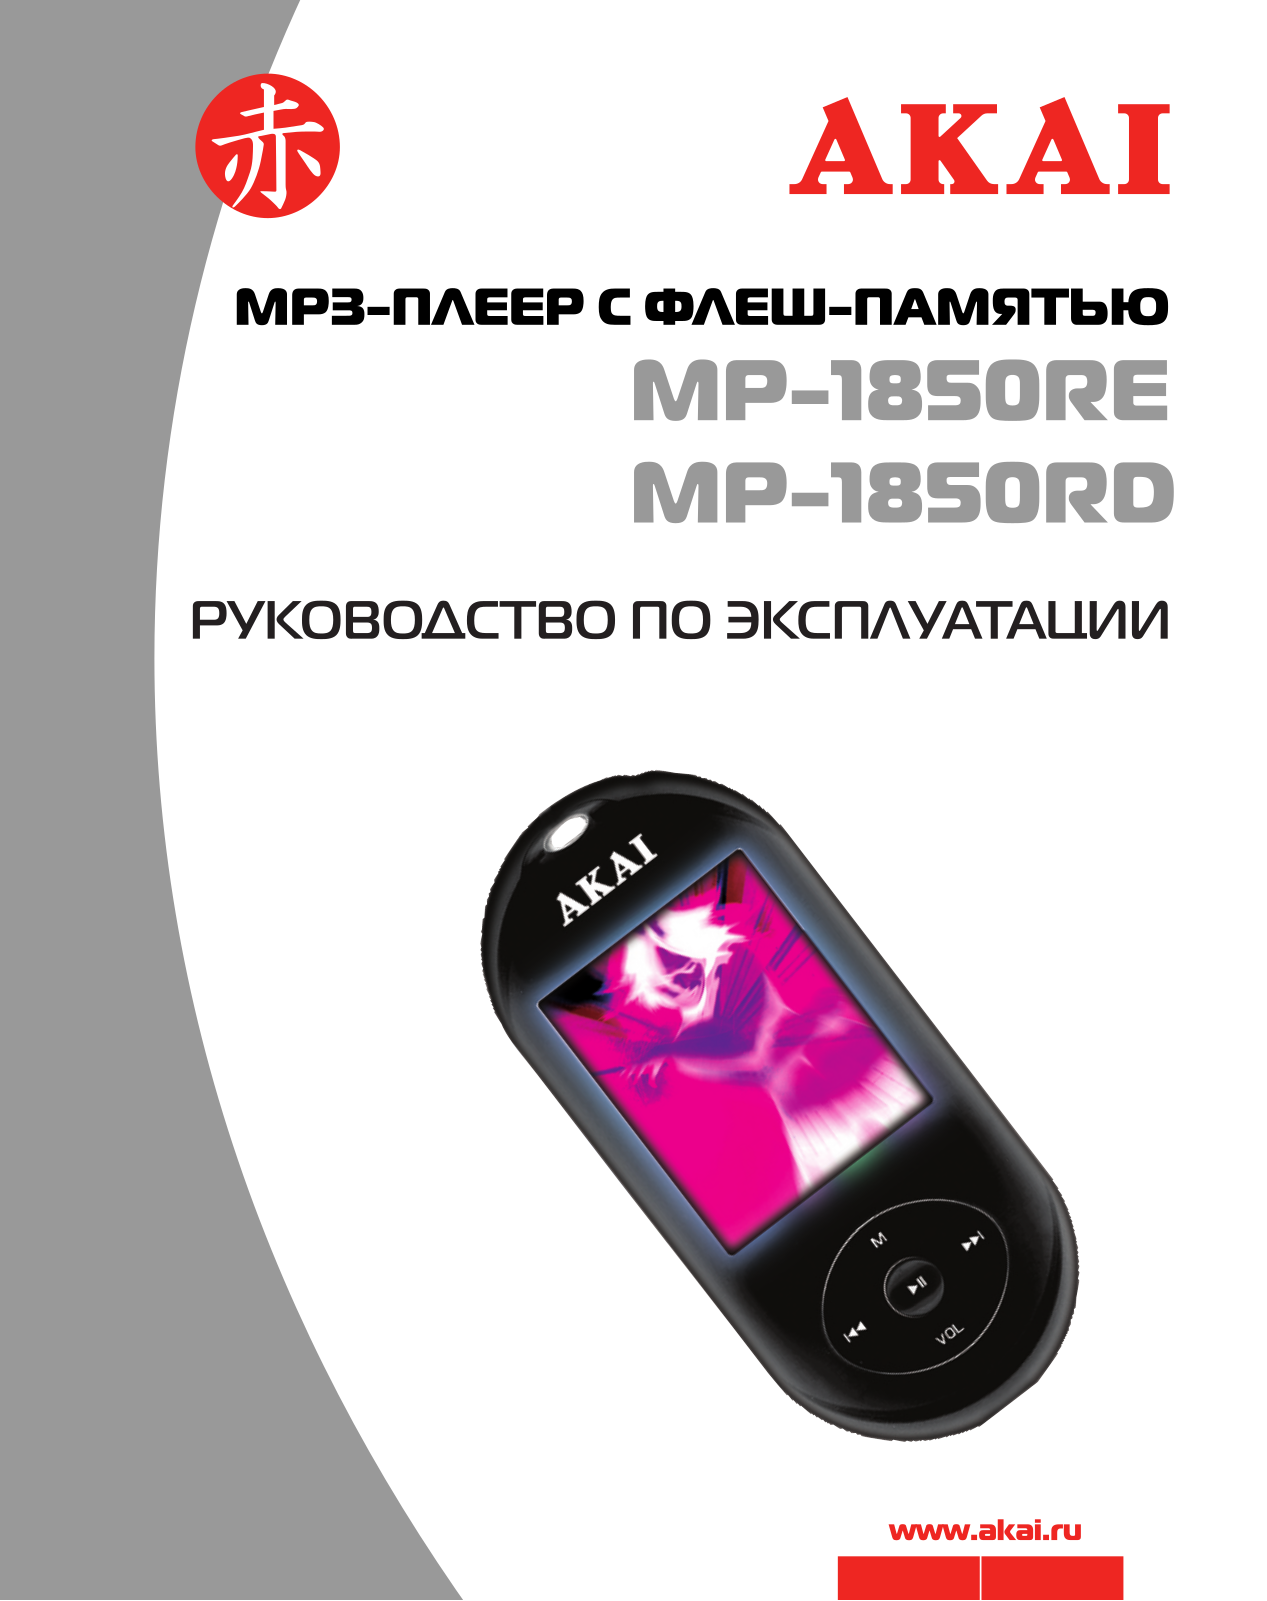 Akai MP-1850RE, MP-1850RD User Manual